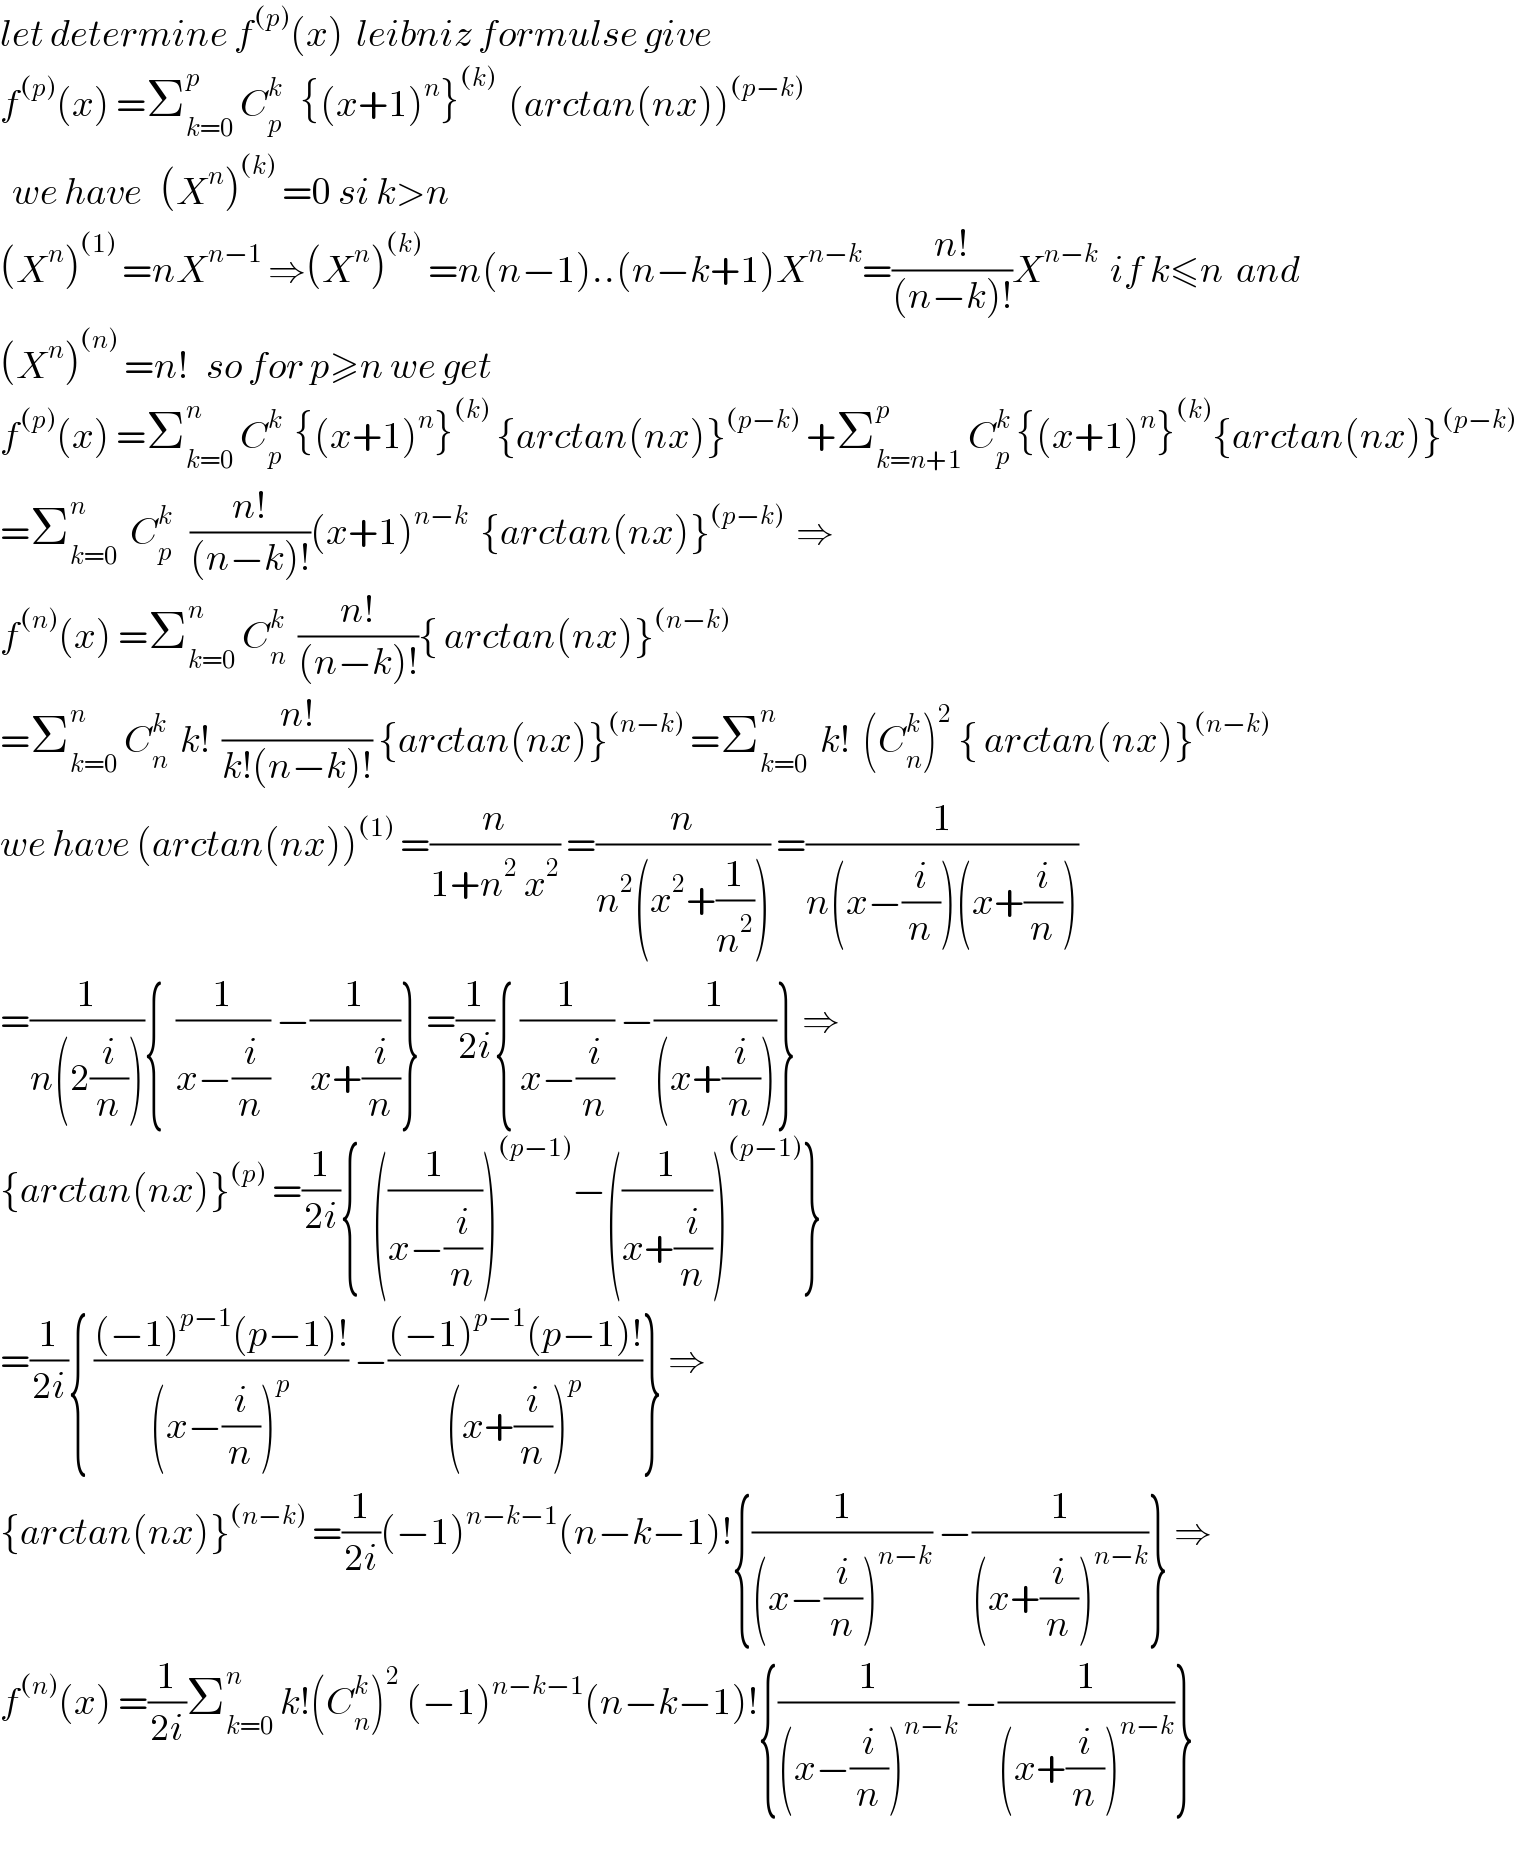 let determine f^((p)) (x)  leibniz formulse give  f^((p)) (x) =Σ_(k=0) ^p  C_p ^k    {(x+1)^n }^((k))   (arctan(nx))^((p−k))     we have   (X^n )^((k))  =0 si k>n  (X^n )^((1))  =nX^(n−1)  ⇒(X^n )^((k))  =n(n−1)..(n−k+1)X^(n−k) =((n!)/((n−k)!))X^(n−k)   if k≤n  and   (X^n )^((n))  =n!   so for p≥n we get  f^((p)) (x) =Σ_(k=0) ^n  C_p ^k   {(x+1)^n }^((k))  {arctan(nx)}^((p−k))  +Σ_(k=n+1) ^p  C_p ^k  {(x+1)^n }^((k)) {arctan(nx)}^((p−k))   =Σ_(k=0) ^n   C_p ^k    ((n!)/((n−k)!))(x+1)^(n−k)   {arctan(nx)}^((p−k))   ⇒  f^((n)) (x) =Σ_(k=0) ^n  C_n ^k   ((n!)/((n−k)!)){ arctan(nx)}^((n−k))   =Σ_(k=0) ^n  C_n ^k   k!  ((n!)/(k!(n−k)!)) {arctan(nx)}^((n−k))  =Σ_(k=0) ^n   k!  (C_n ^k )^2  { arctan(nx)}^((n−k))   we have (arctan(nx))^((1))  =(n/(1+n^2  x^2 )) =(n/(n^2 (x^2 +(1/n^2 )))) =(1/(n(x−(i/n))(x+(i/n))))  =(1/(n(2(i/n)))){  (1/(x−(i/n))) −(1/(x+(i/n)))} =(1/(2i)){ (1/(x−(i/n))) −(1/((x+(i/n))))} ⇒  {arctan(nx)}^((p))  =(1/(2i)){  ((1/(x−(i/n))))^((p−1)) −((1/(x+(i/n))))^((p−1)) }  =(1/(2i)){ (((−1)^(p−1) (p−1)!)/((x−(i/n))^p )) −(((−1)^(p−1) (p−1)!)/((x+(i/n))^p ))} ⇒  {arctan(nx)}^((n−k))  =(1/(2i))(−1)^(n−k−1) (n−k−1)!{(1/((x−(i/n))^(n−k) )) −(1/((x+(i/n))^(n−k) ))} ⇒  f^((n)) (x) =(1/(2i))Σ_(k=0) ^n  k!(C_n ^k )^2  (−1)^(n−k−1) (n−k−1)!{(1/((x−(i/n))^(n−k) )) −(1/((x+(i/n))^(n−k) ))}  